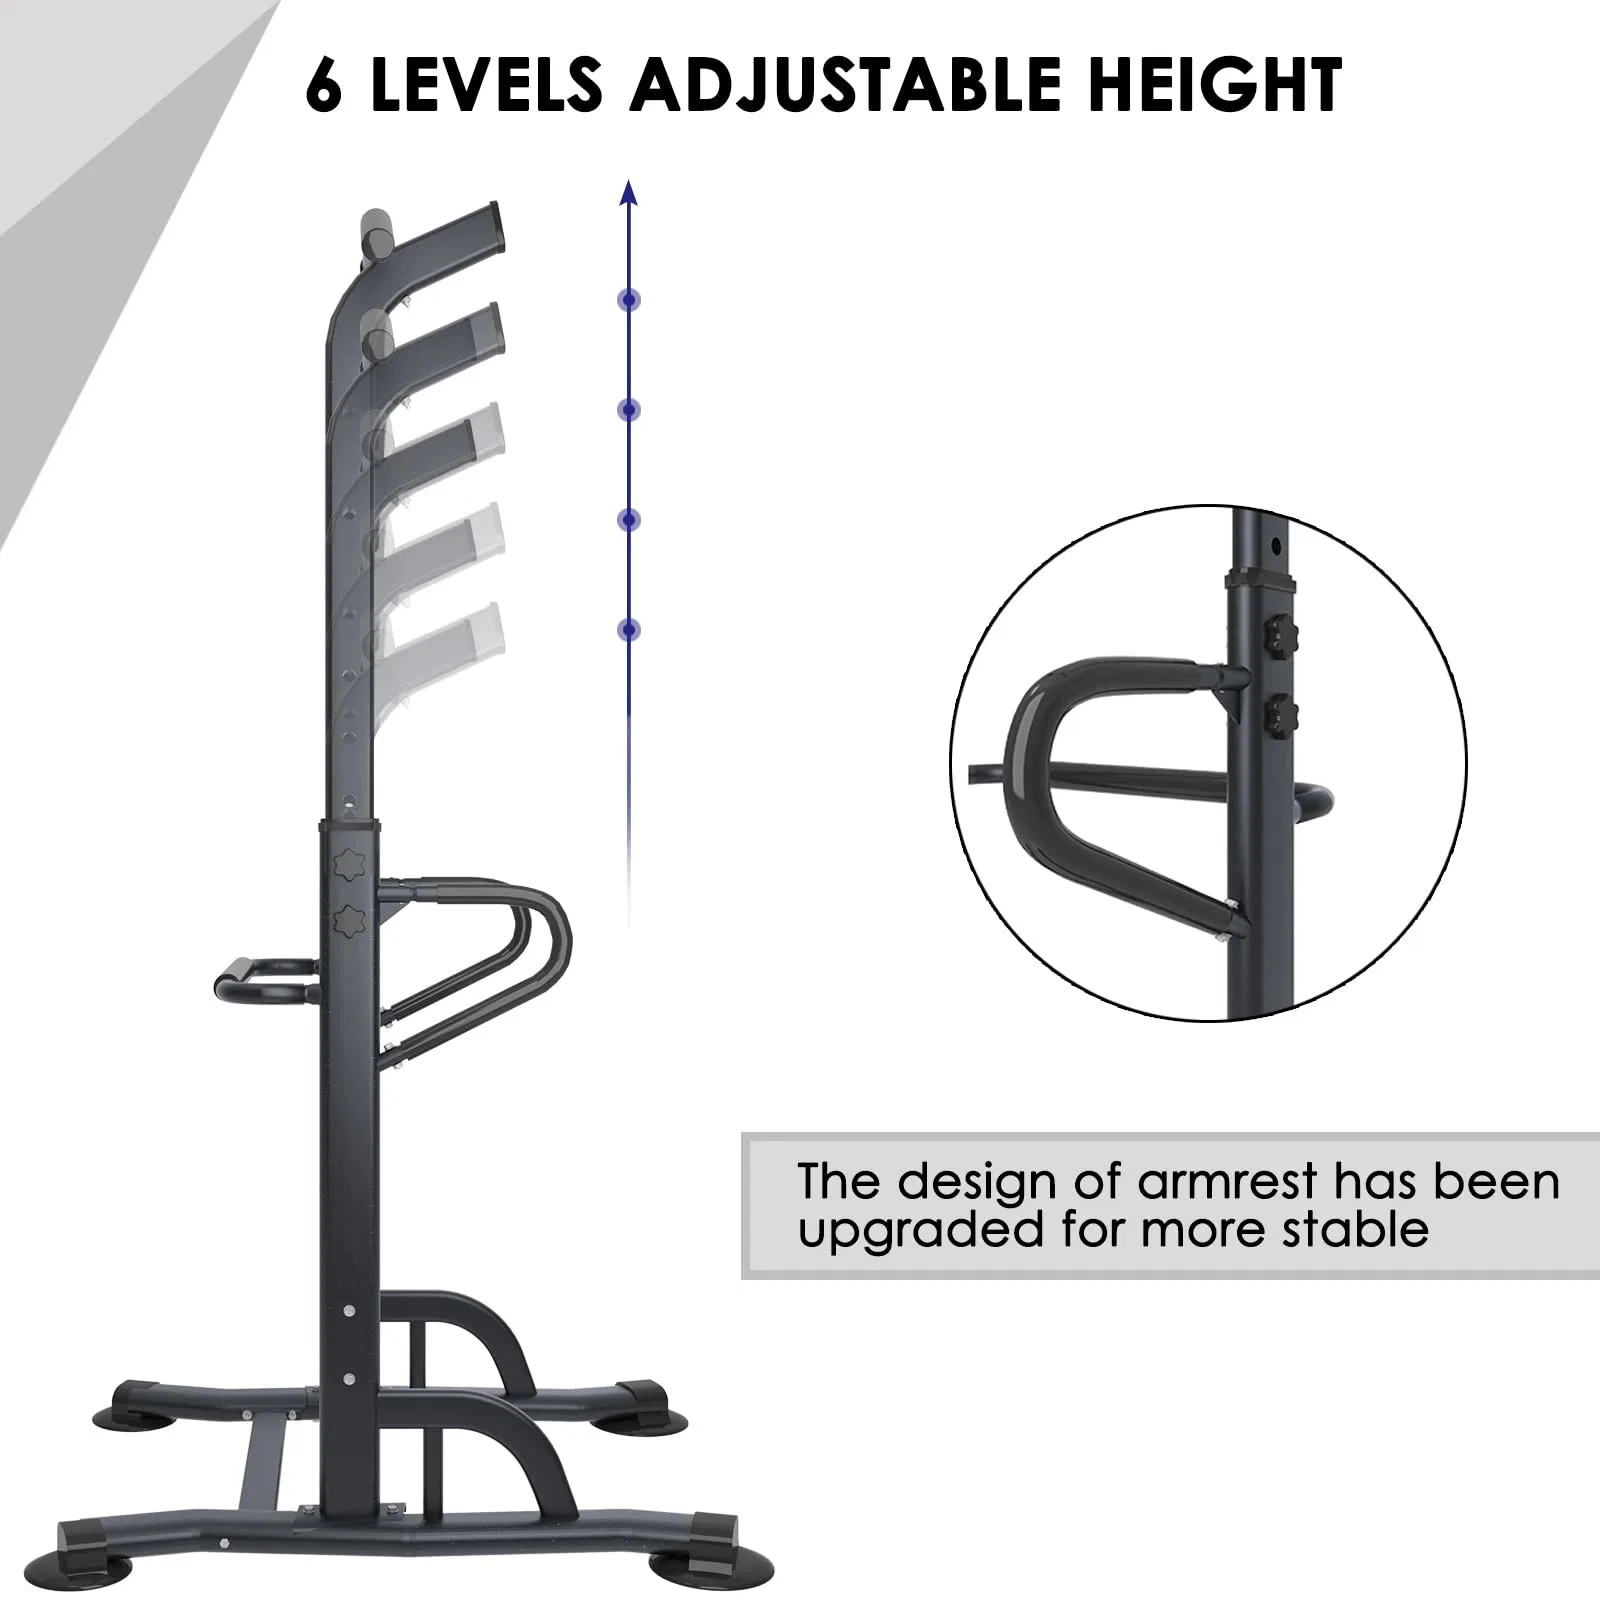 OEM Strength Gym Height Adjustable Training Equipment Pull up Bar Station